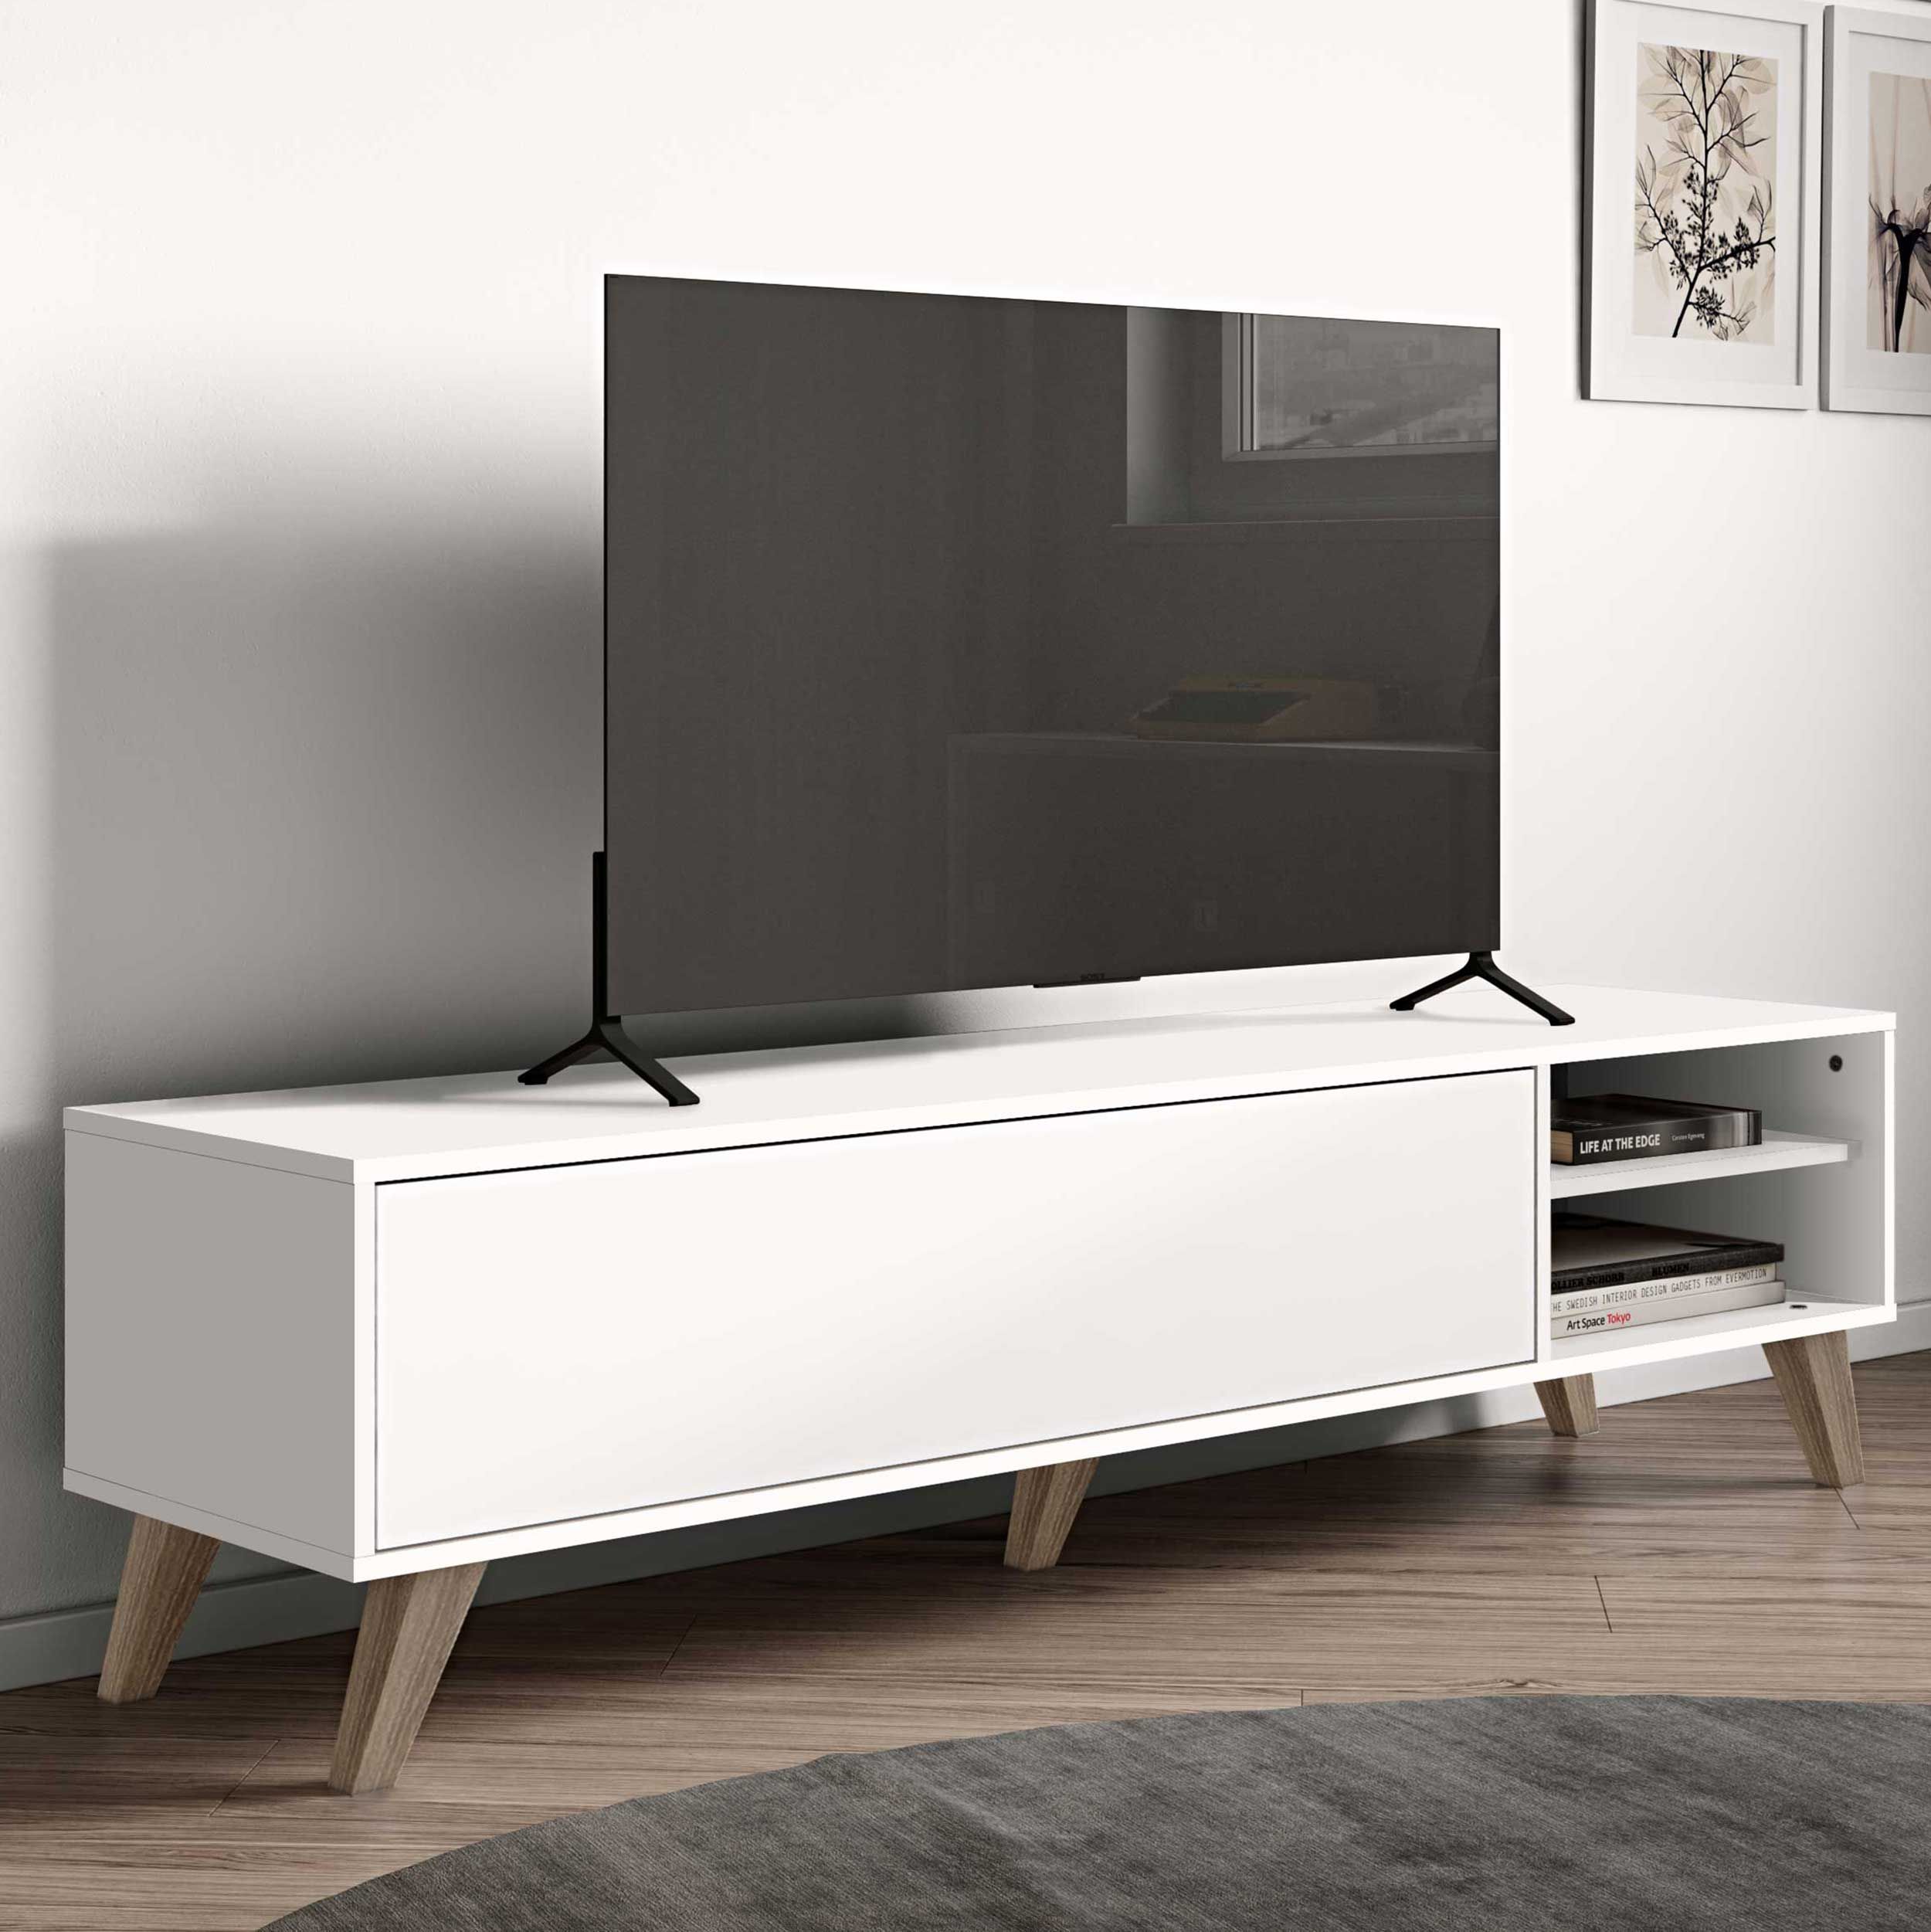 Meuble TV Kim 165cm - blanc Scandinave, Moderne, Design - TEMAHOME